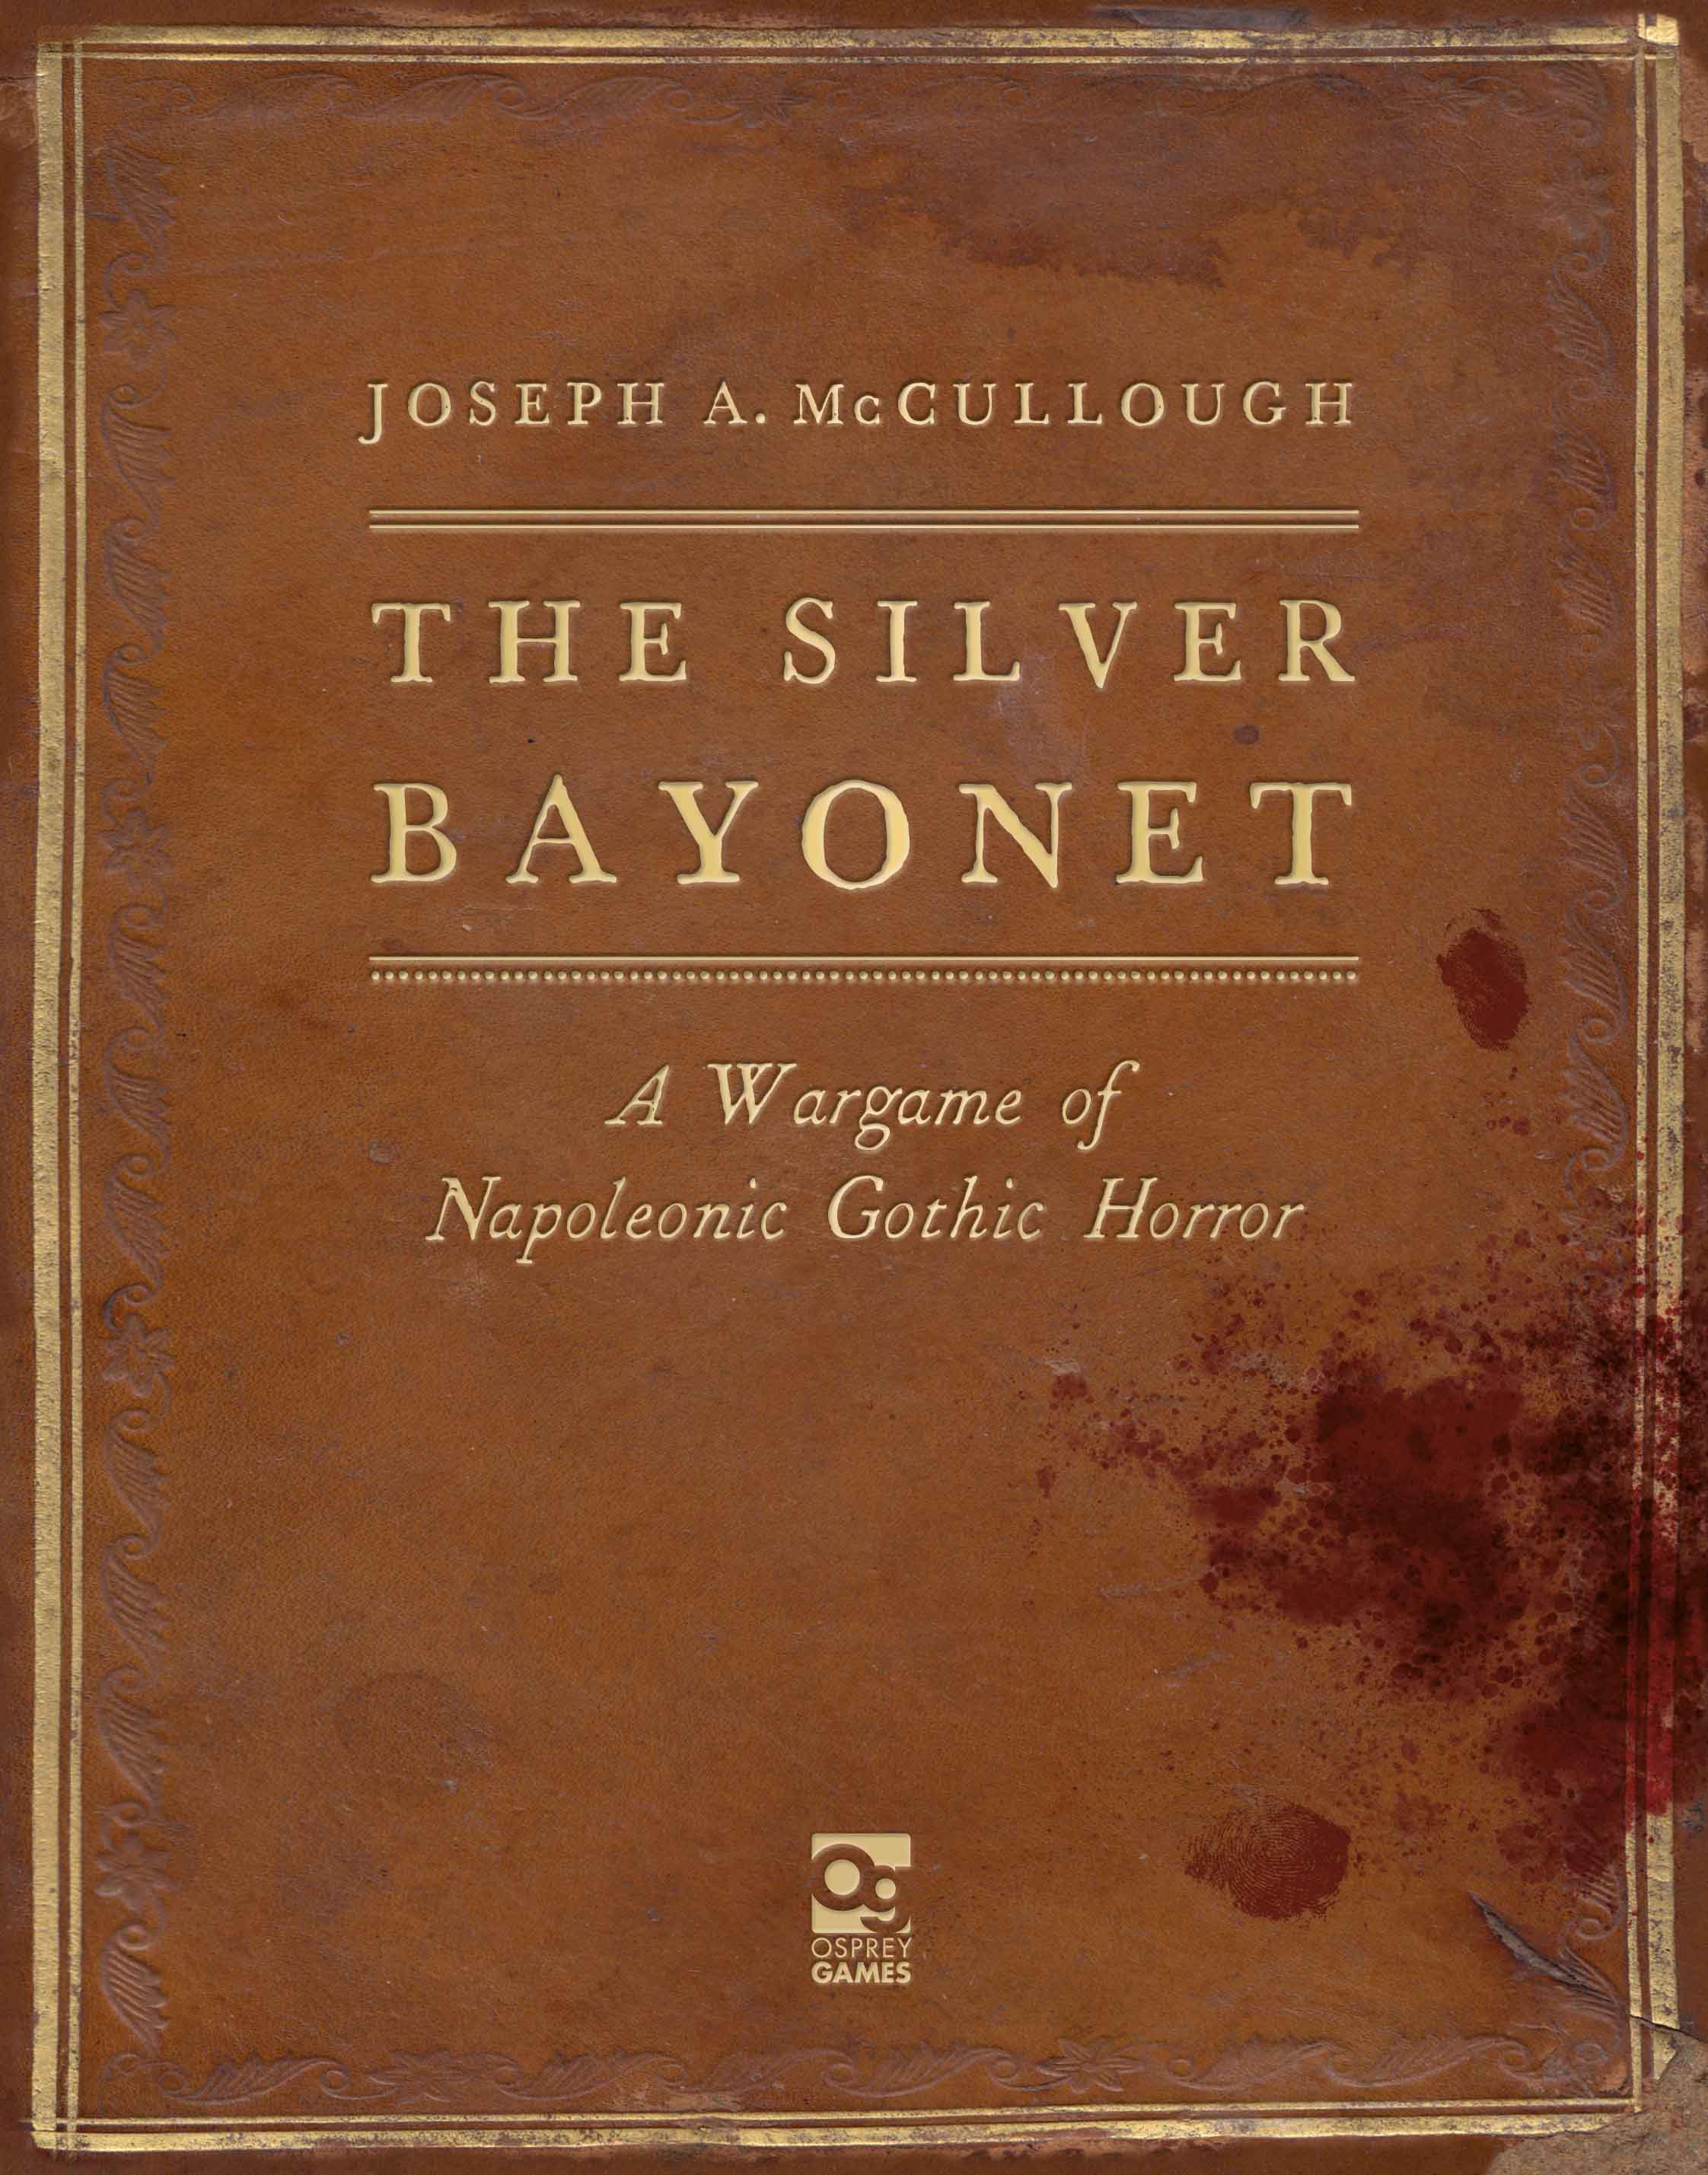 The Silver Bayonet Cover Art